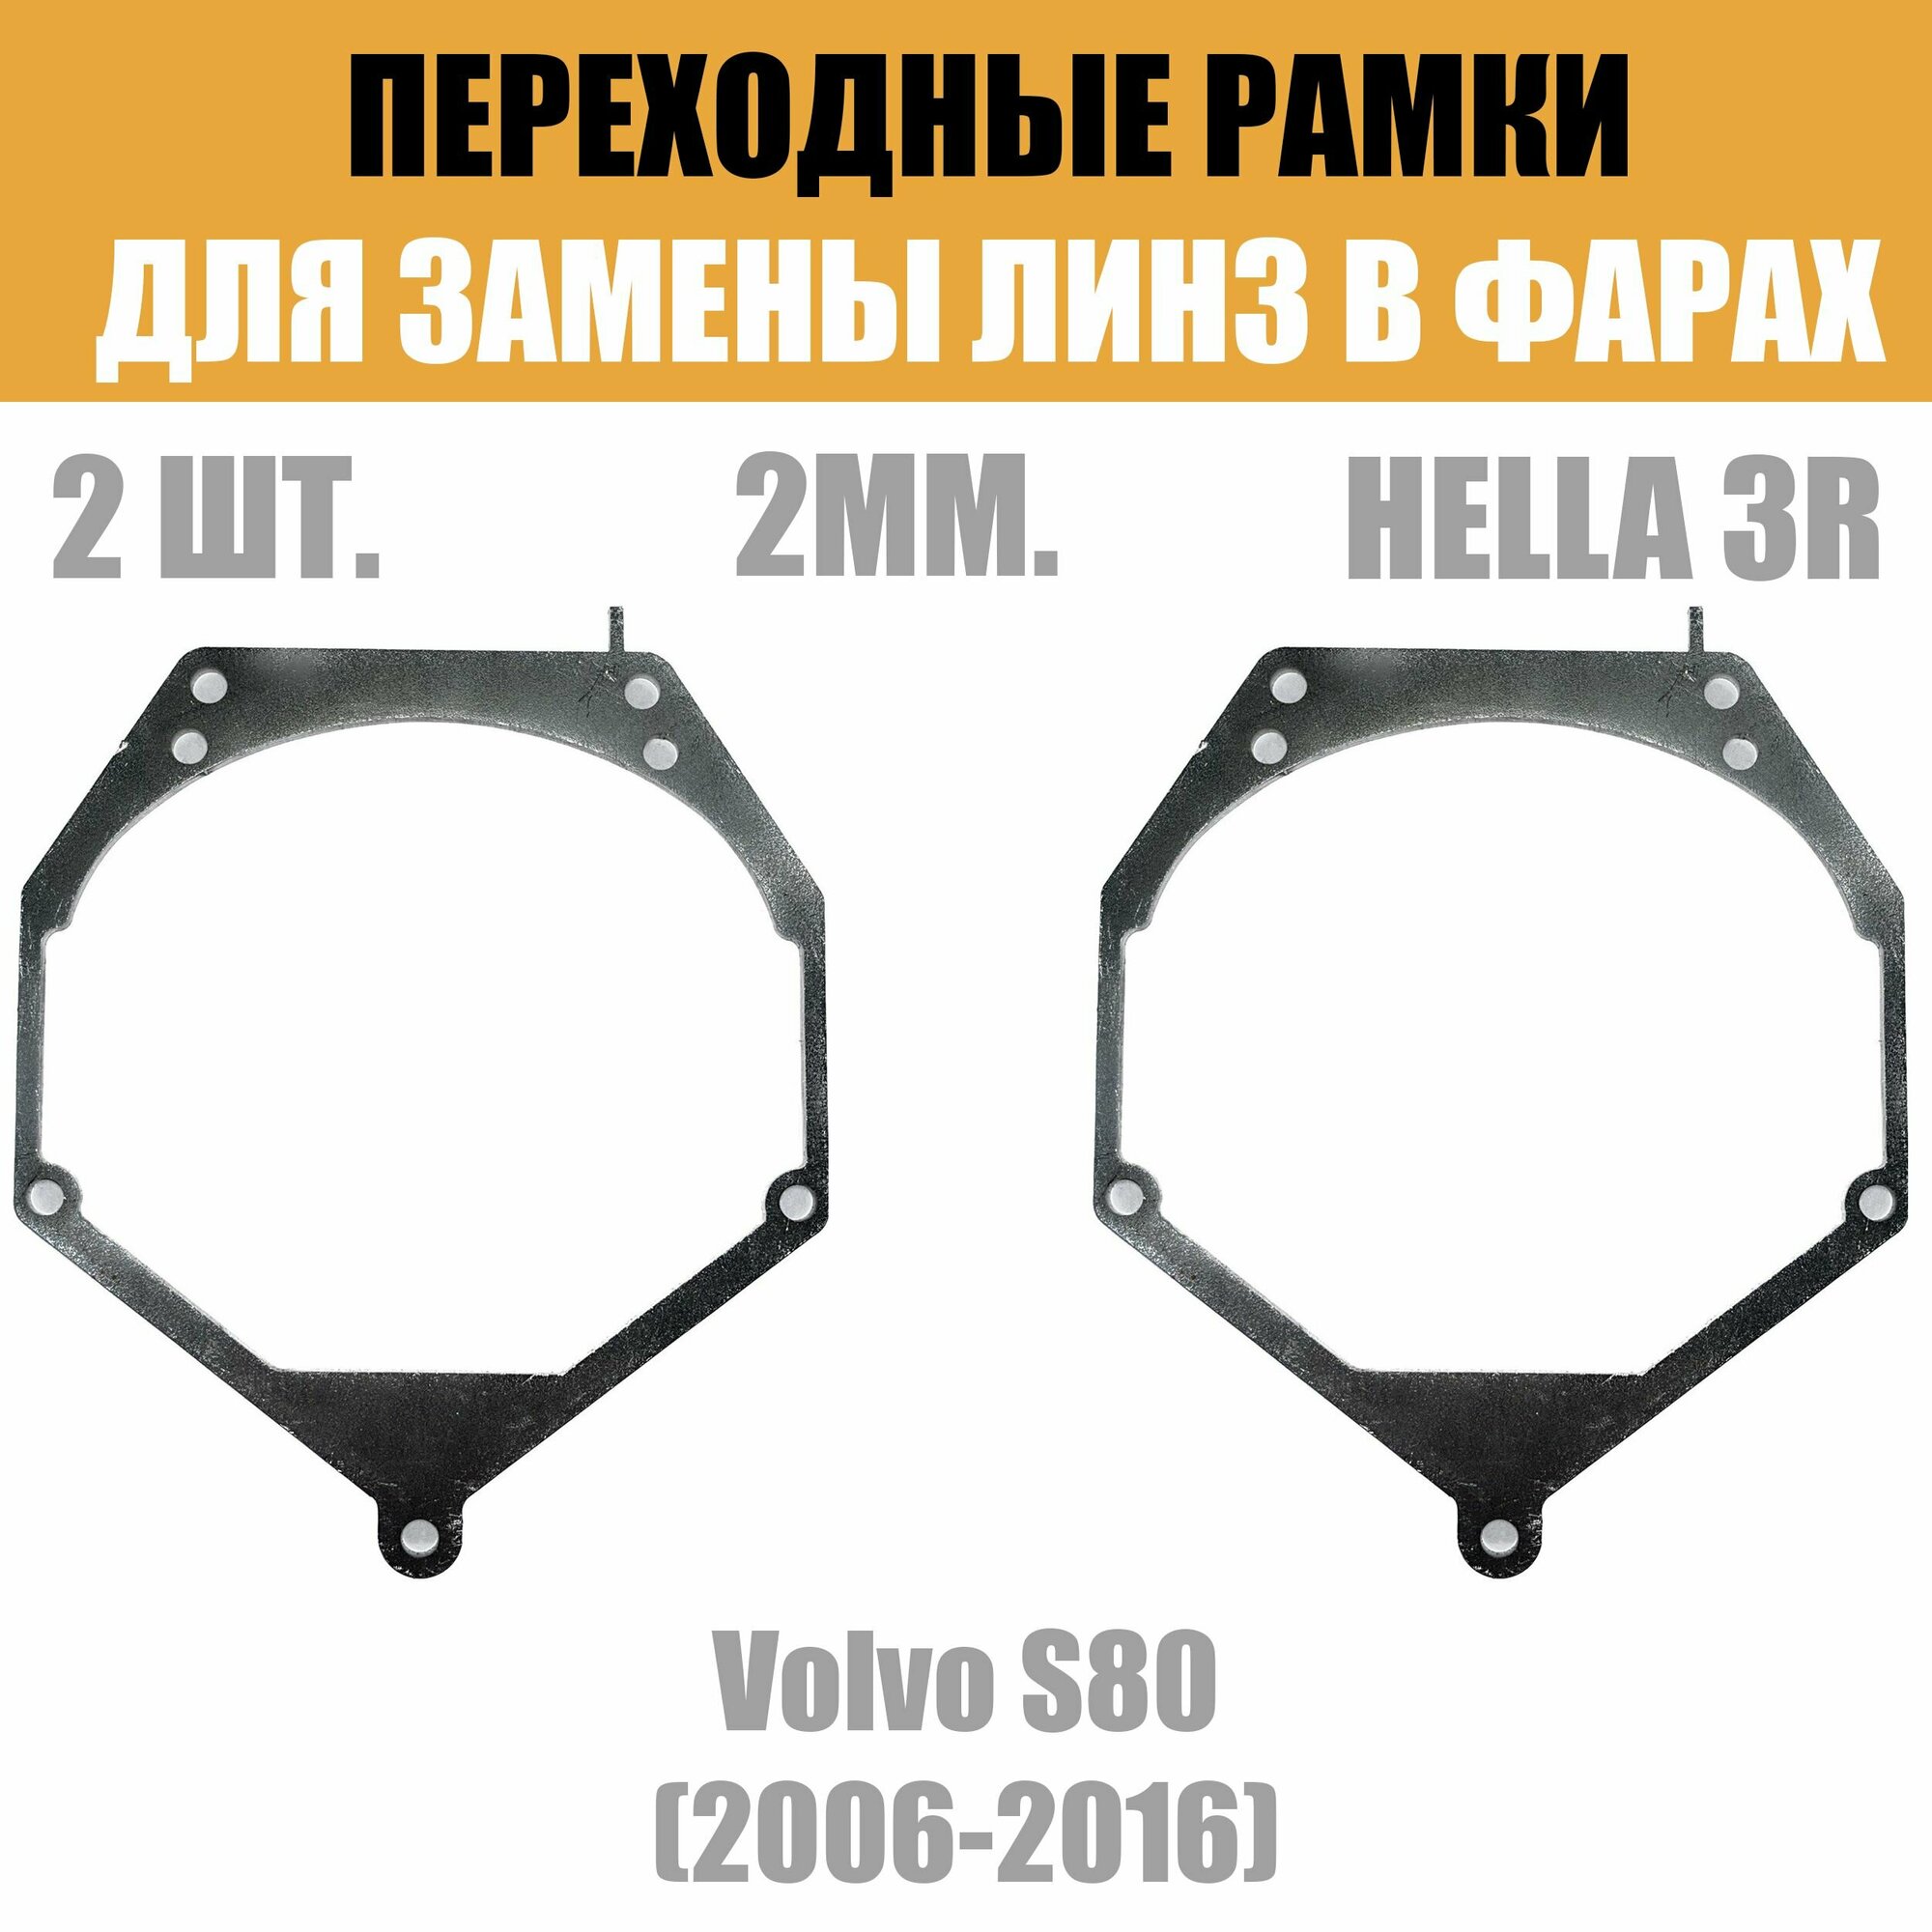 Переходные рамки для линз №55 на Volvo S80 (2006-2016) под модуль Hella 3R/Hella 3 (Комплект 2шт)